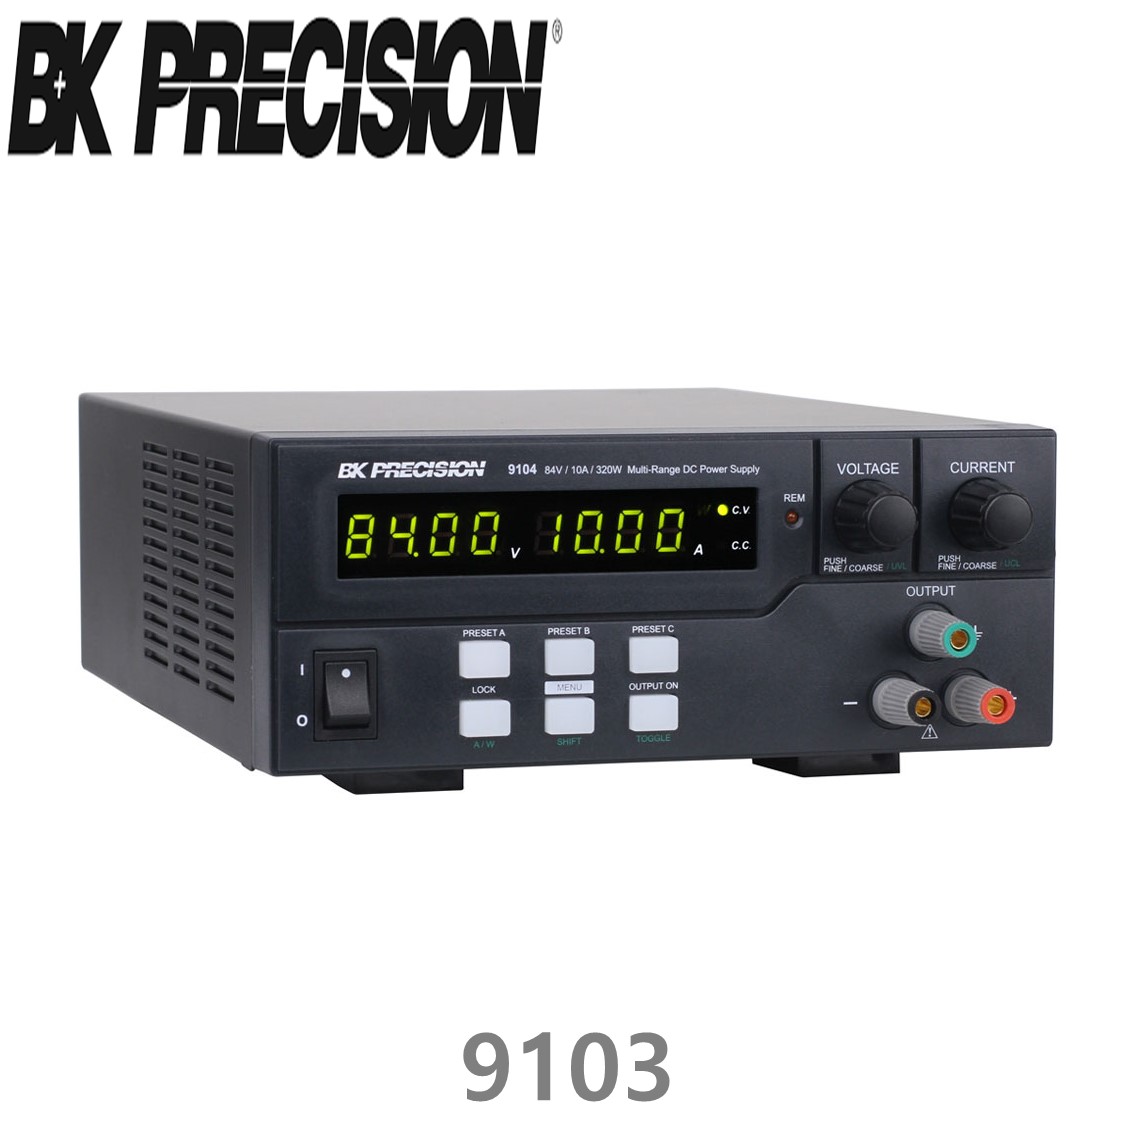 [ BK PRECISION ] BK 9103, 42V/20A(320W), Multi-Range DC Power Supplies, DC 전원공급기, DC전원공급장치, B&K 9103